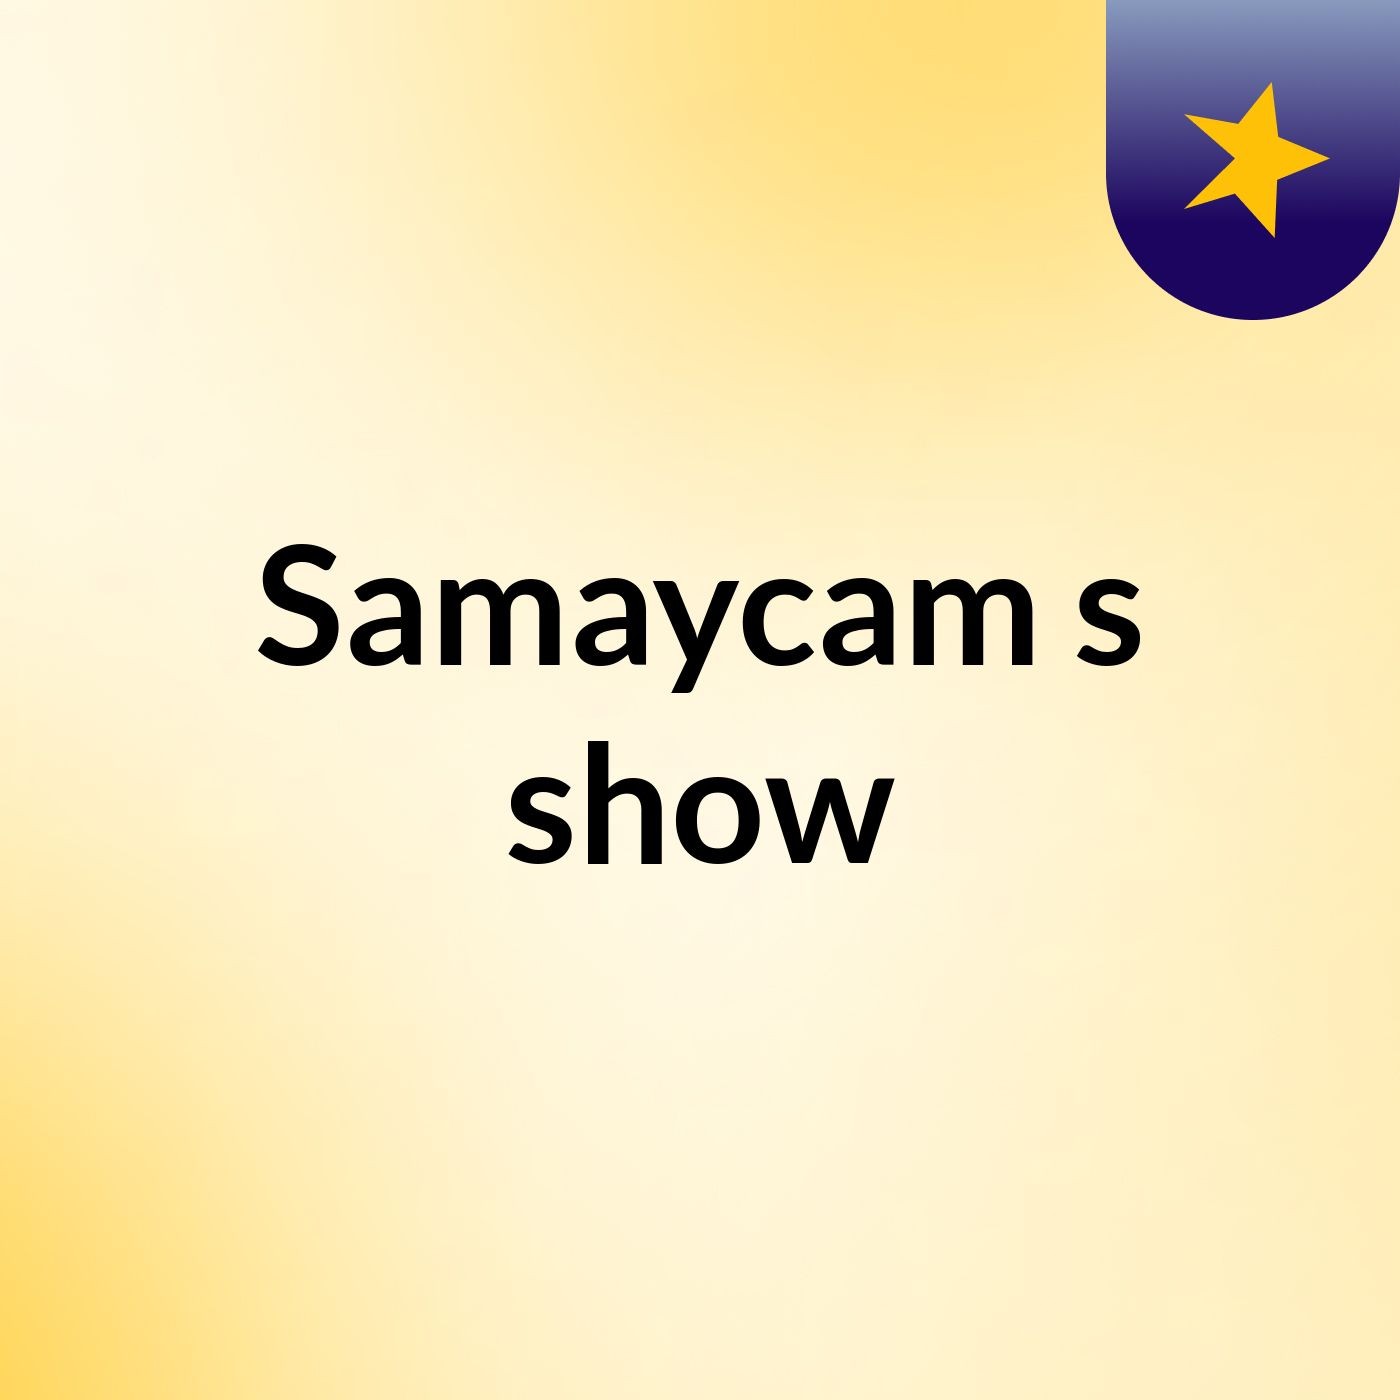 Samaycam's show